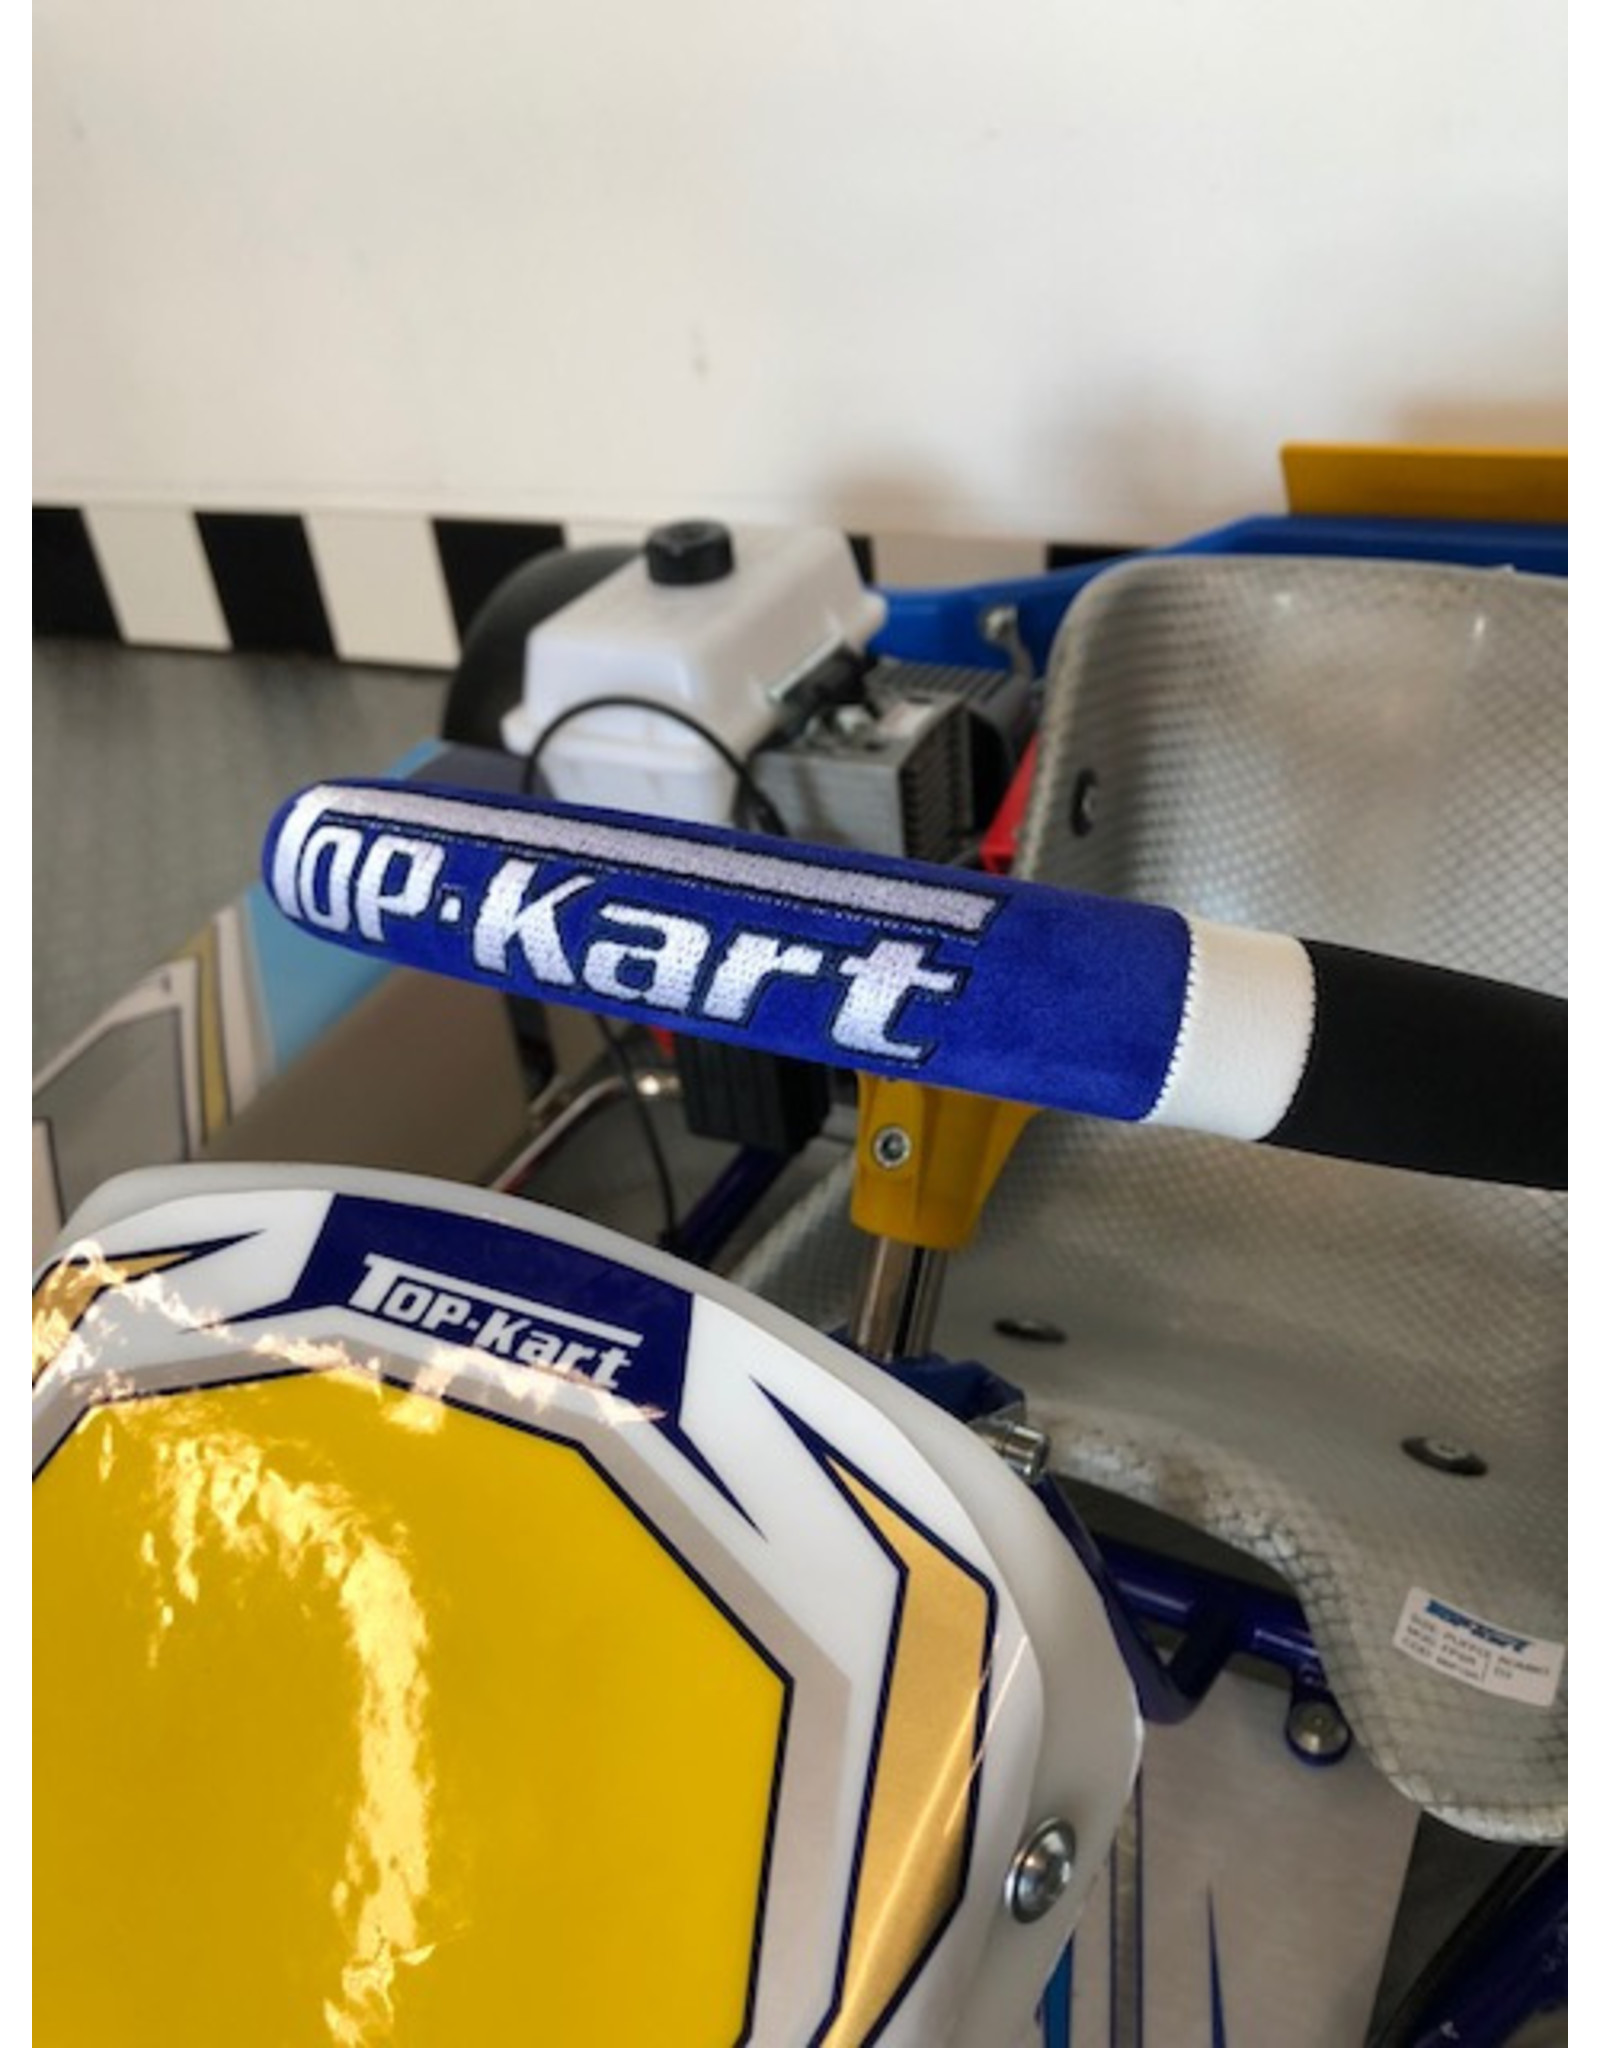 Top Kart Top kart kid kart with comer C52 engine